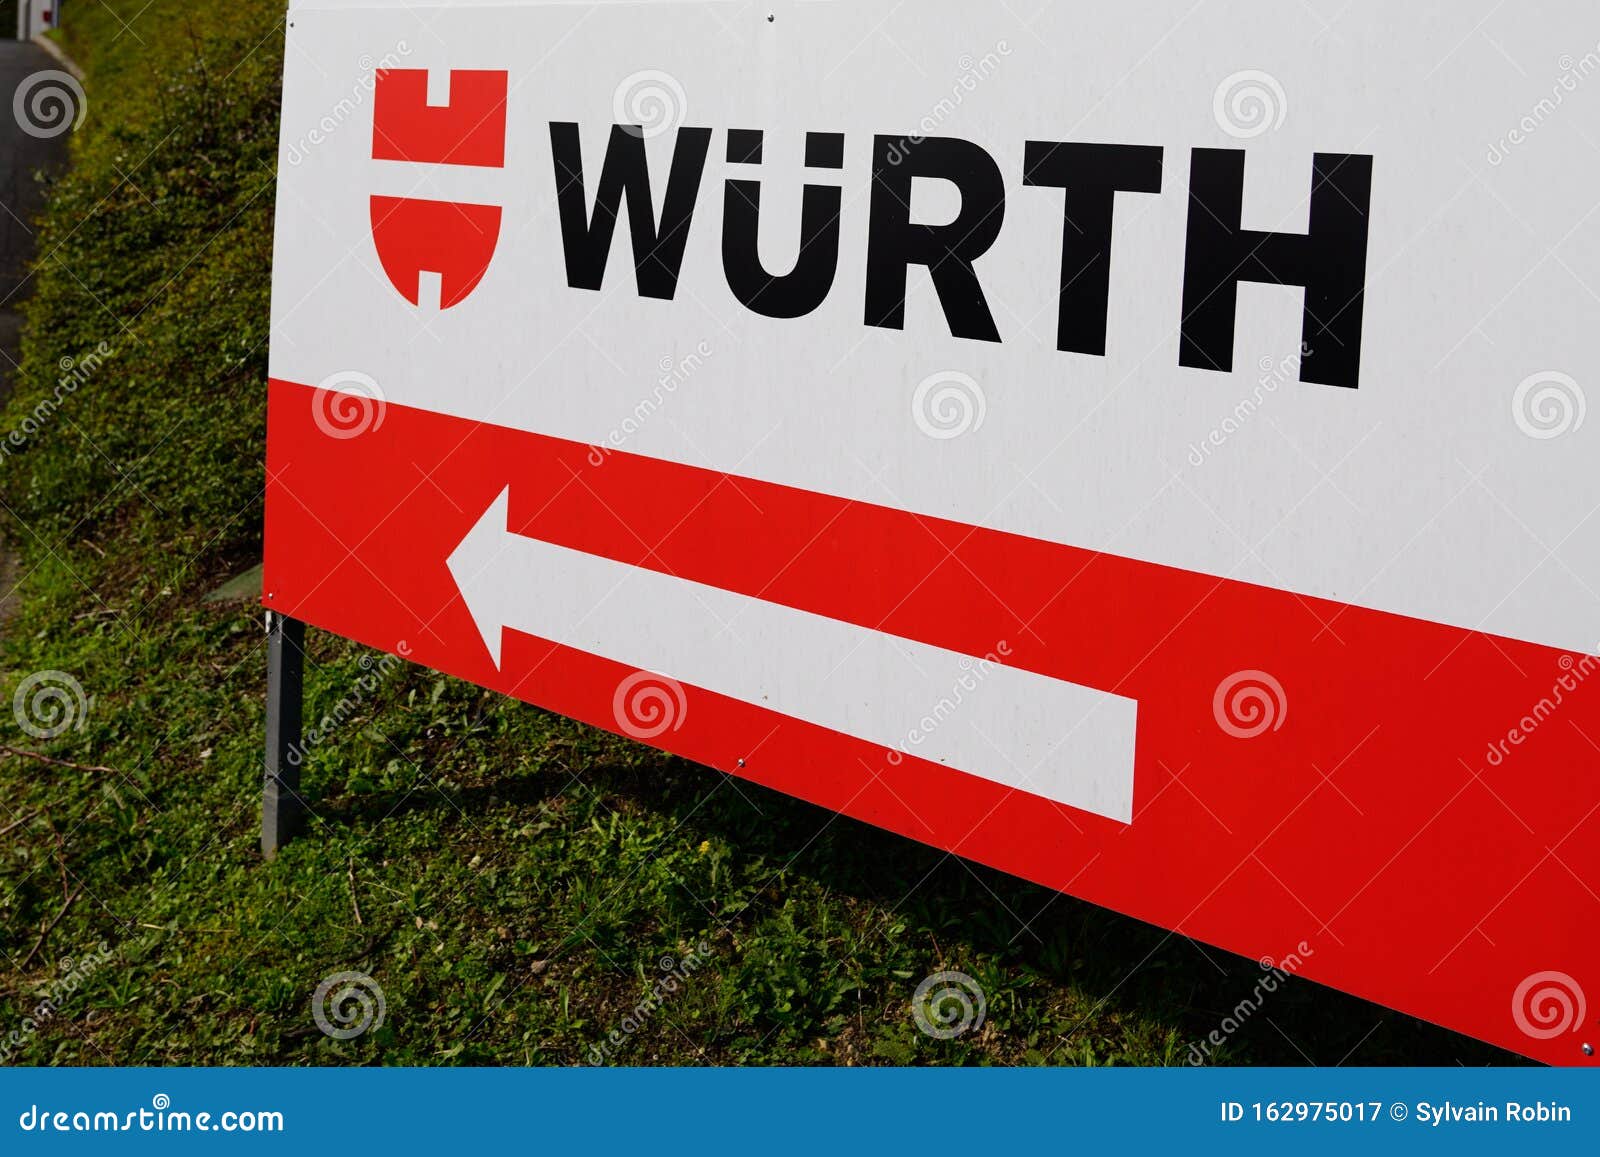 Würth Group 